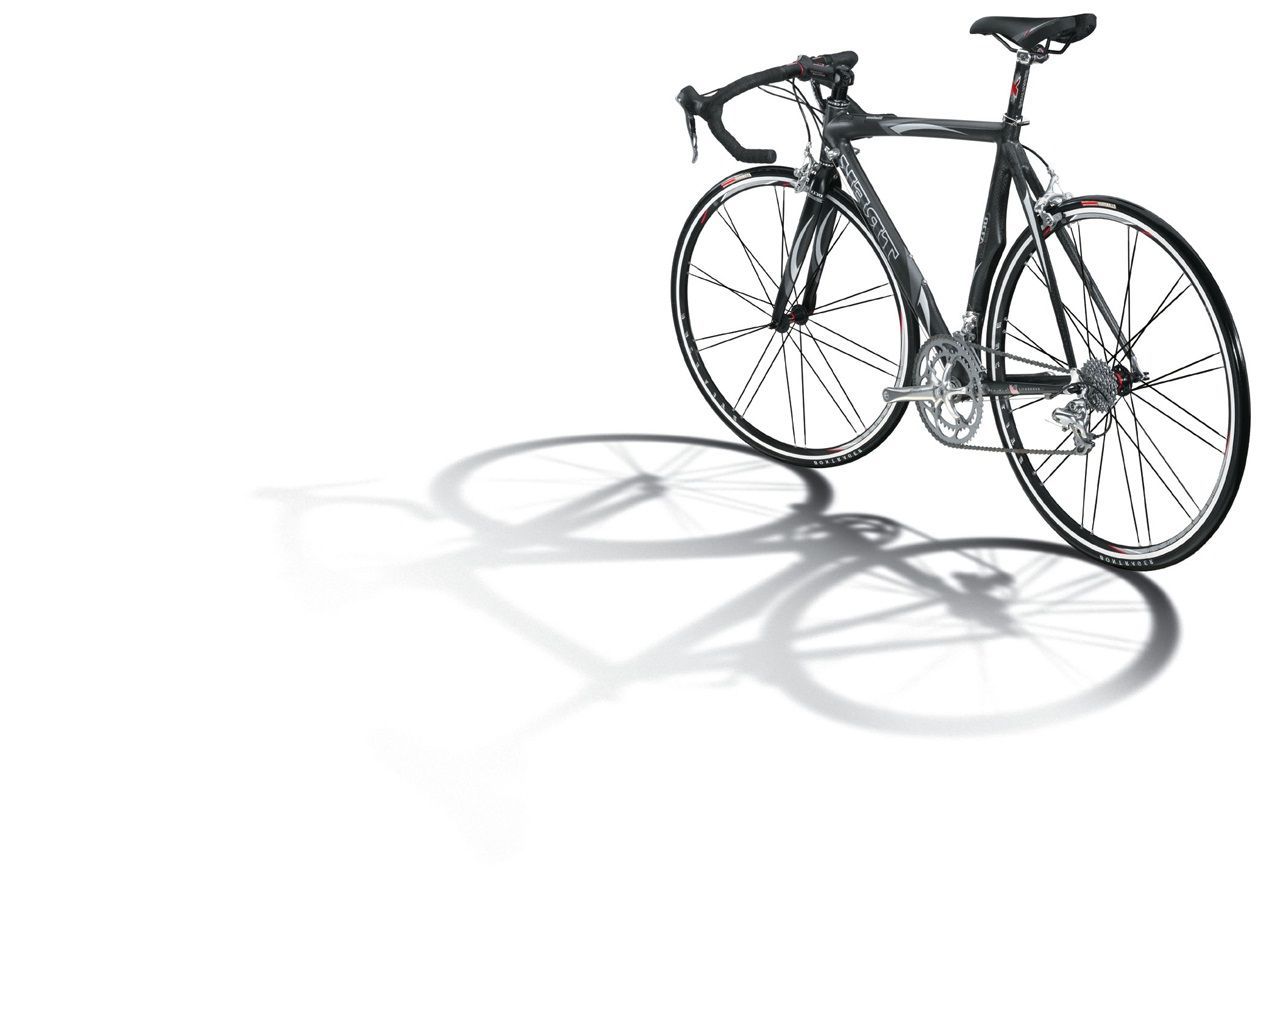 Bicycle Art Image Is 4K Wallpaper